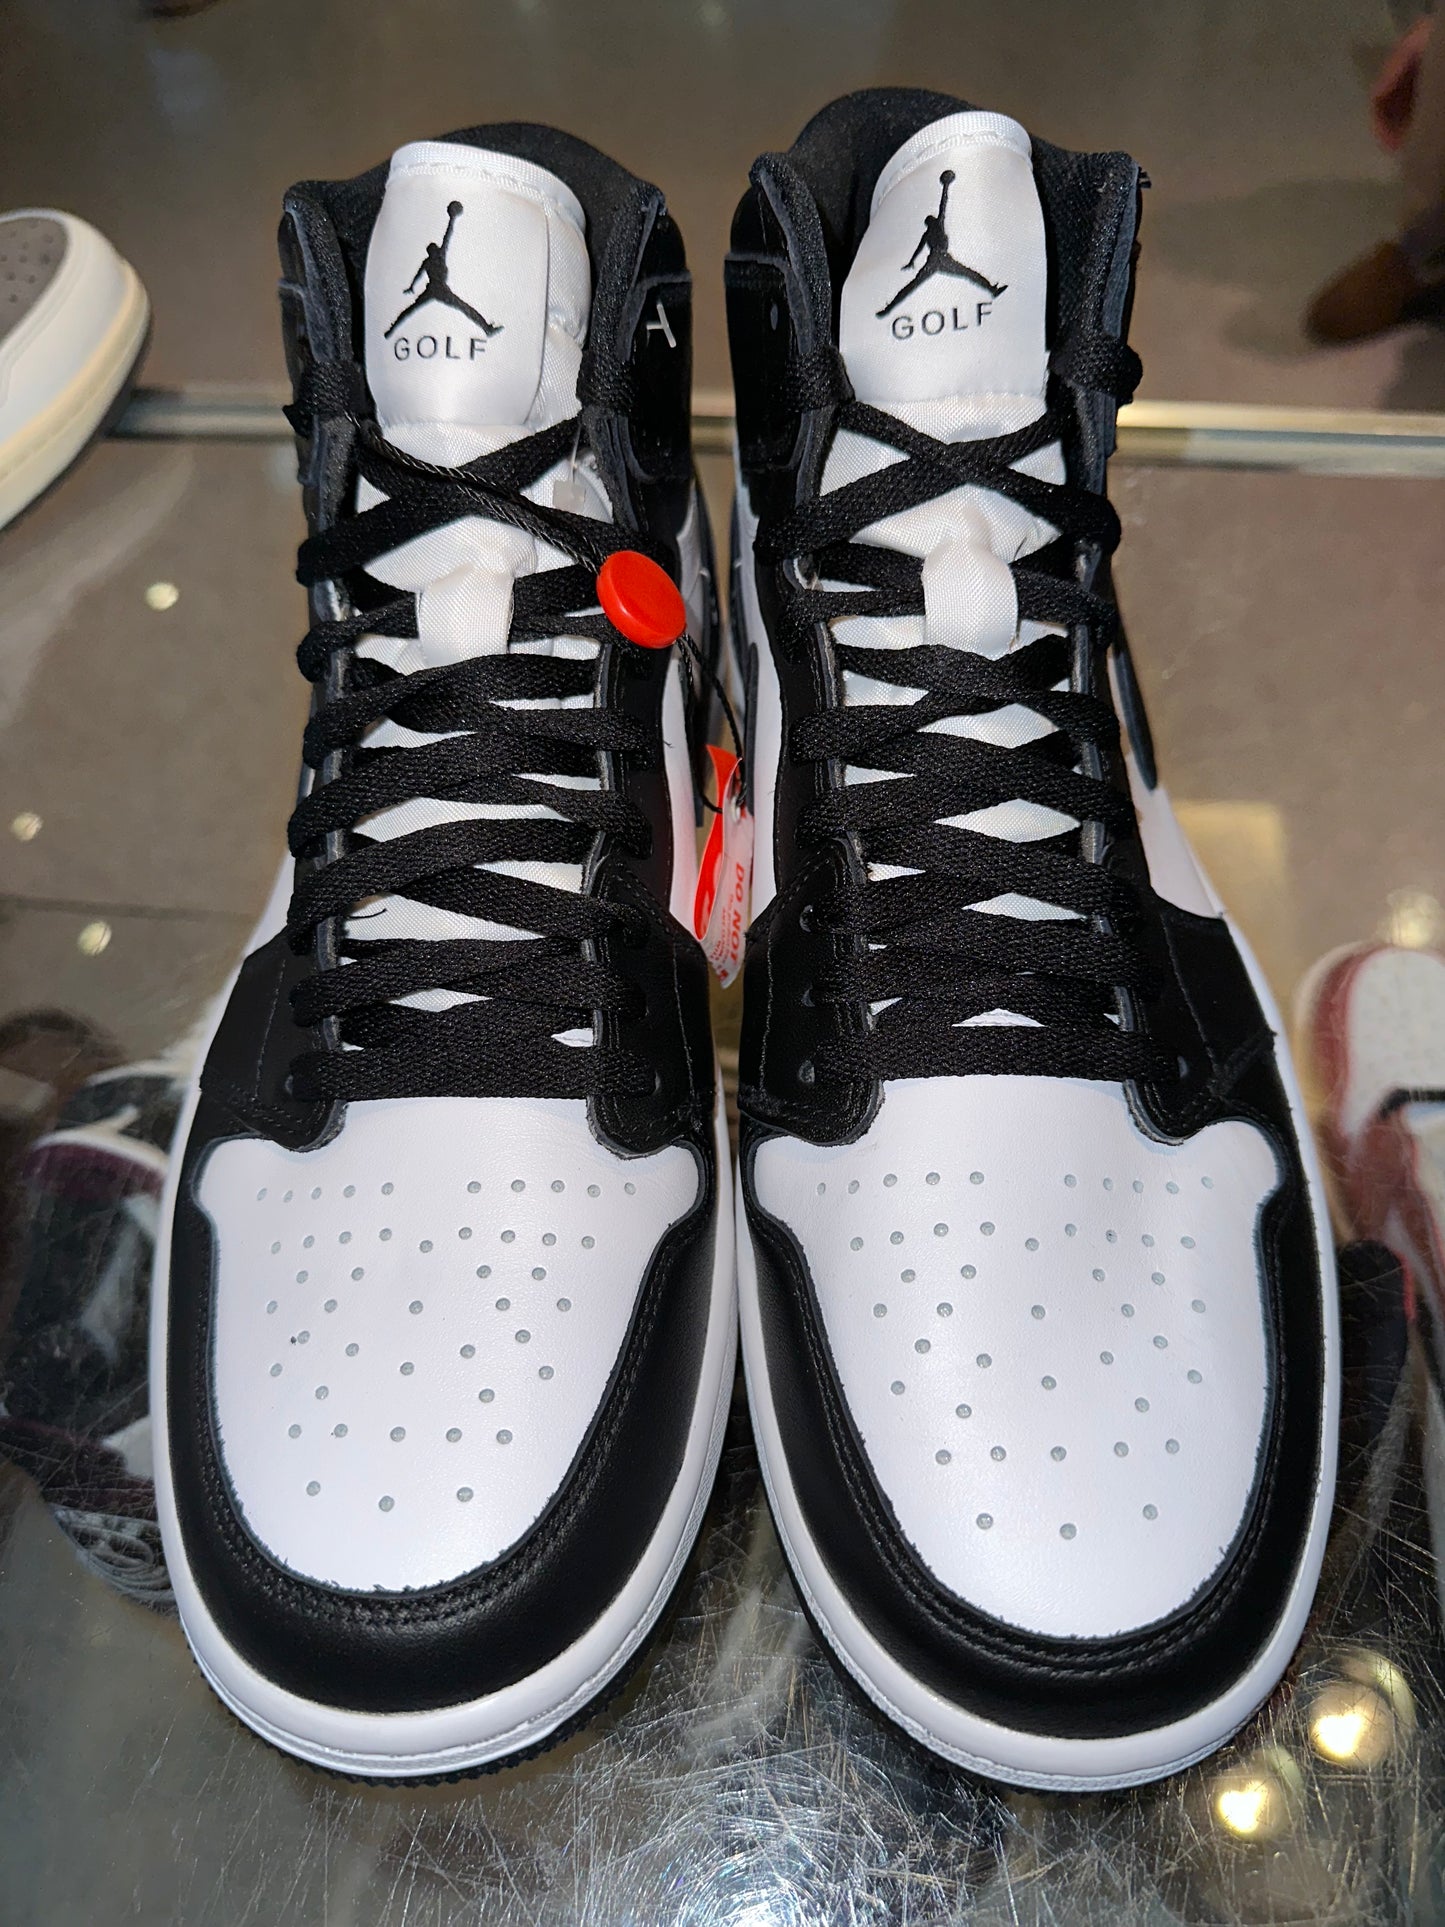 Size 10 Air Jordan 1 High Golf “Black White” Brand New (Mall)